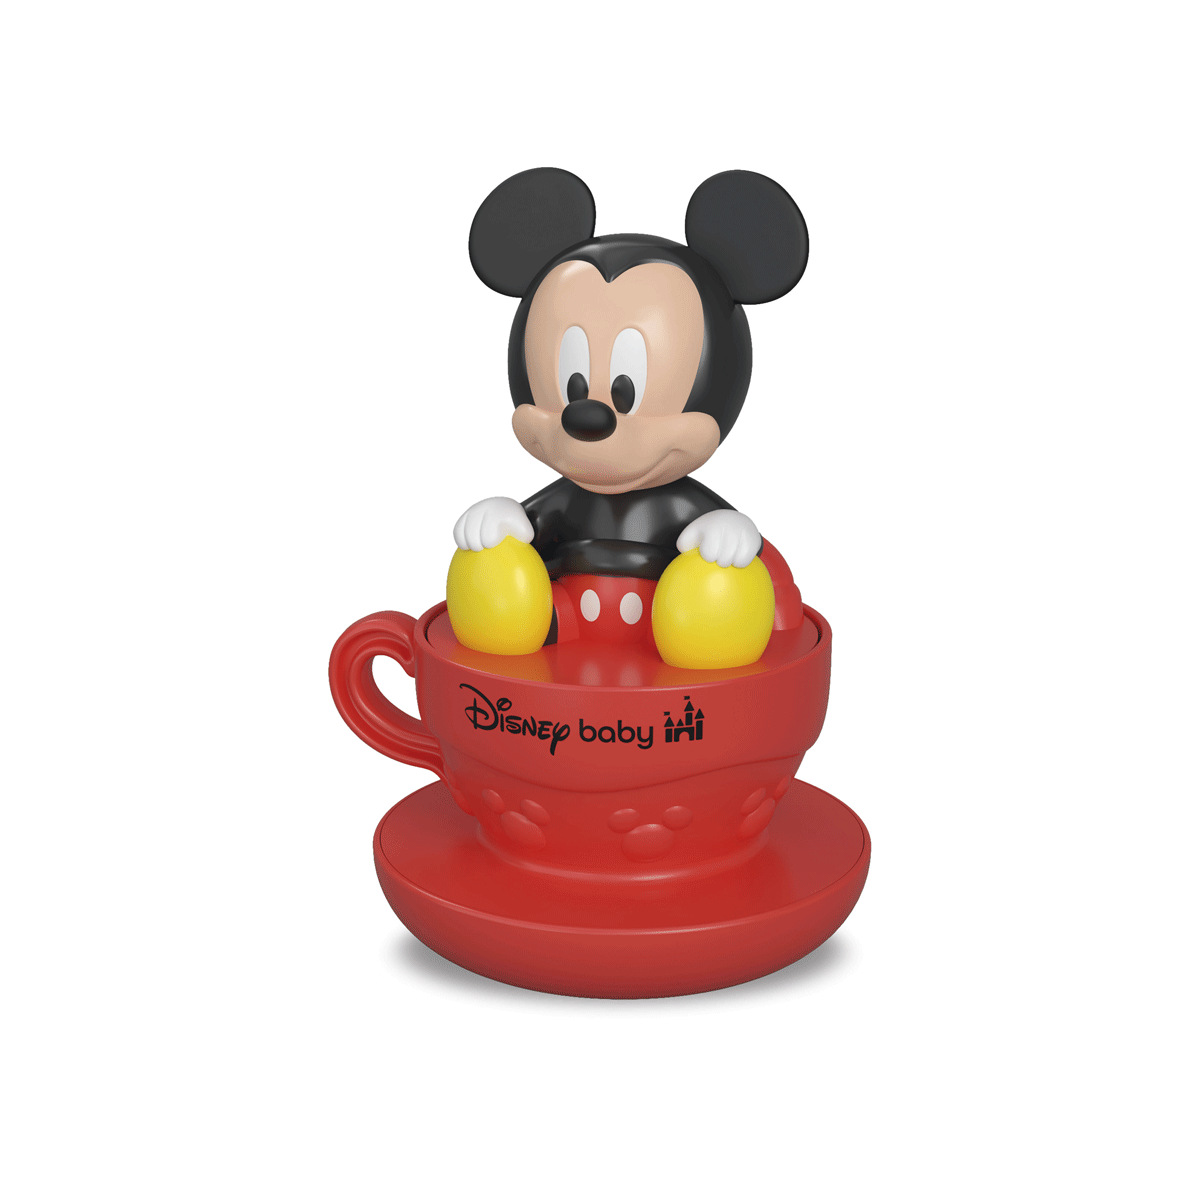 Clementoni - 17891 - disney spinning teacups - BABY CLEMENTONI, Disney Stitch